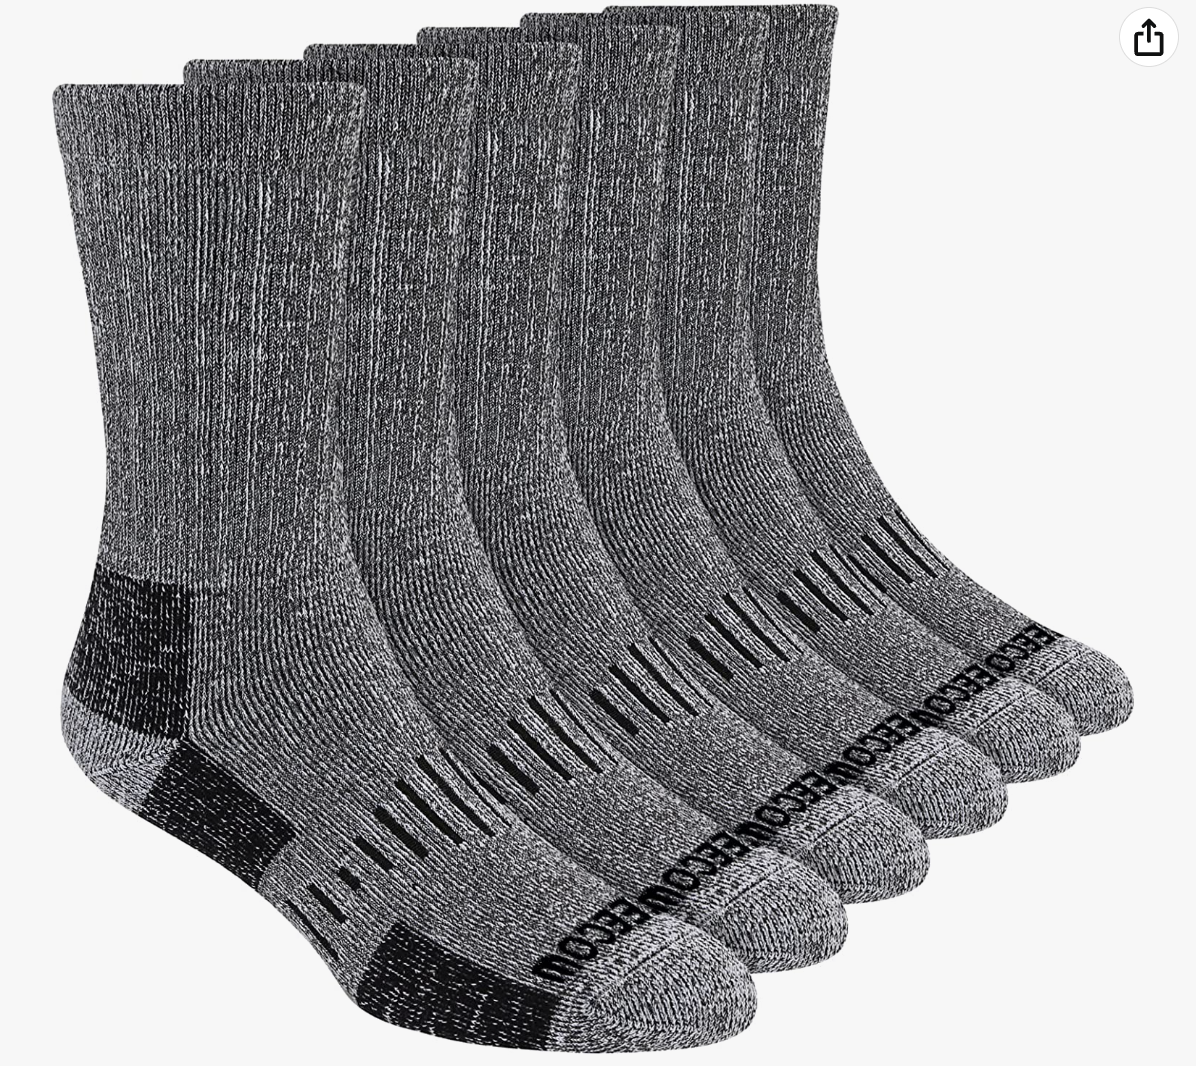 Wool Hiking Socks